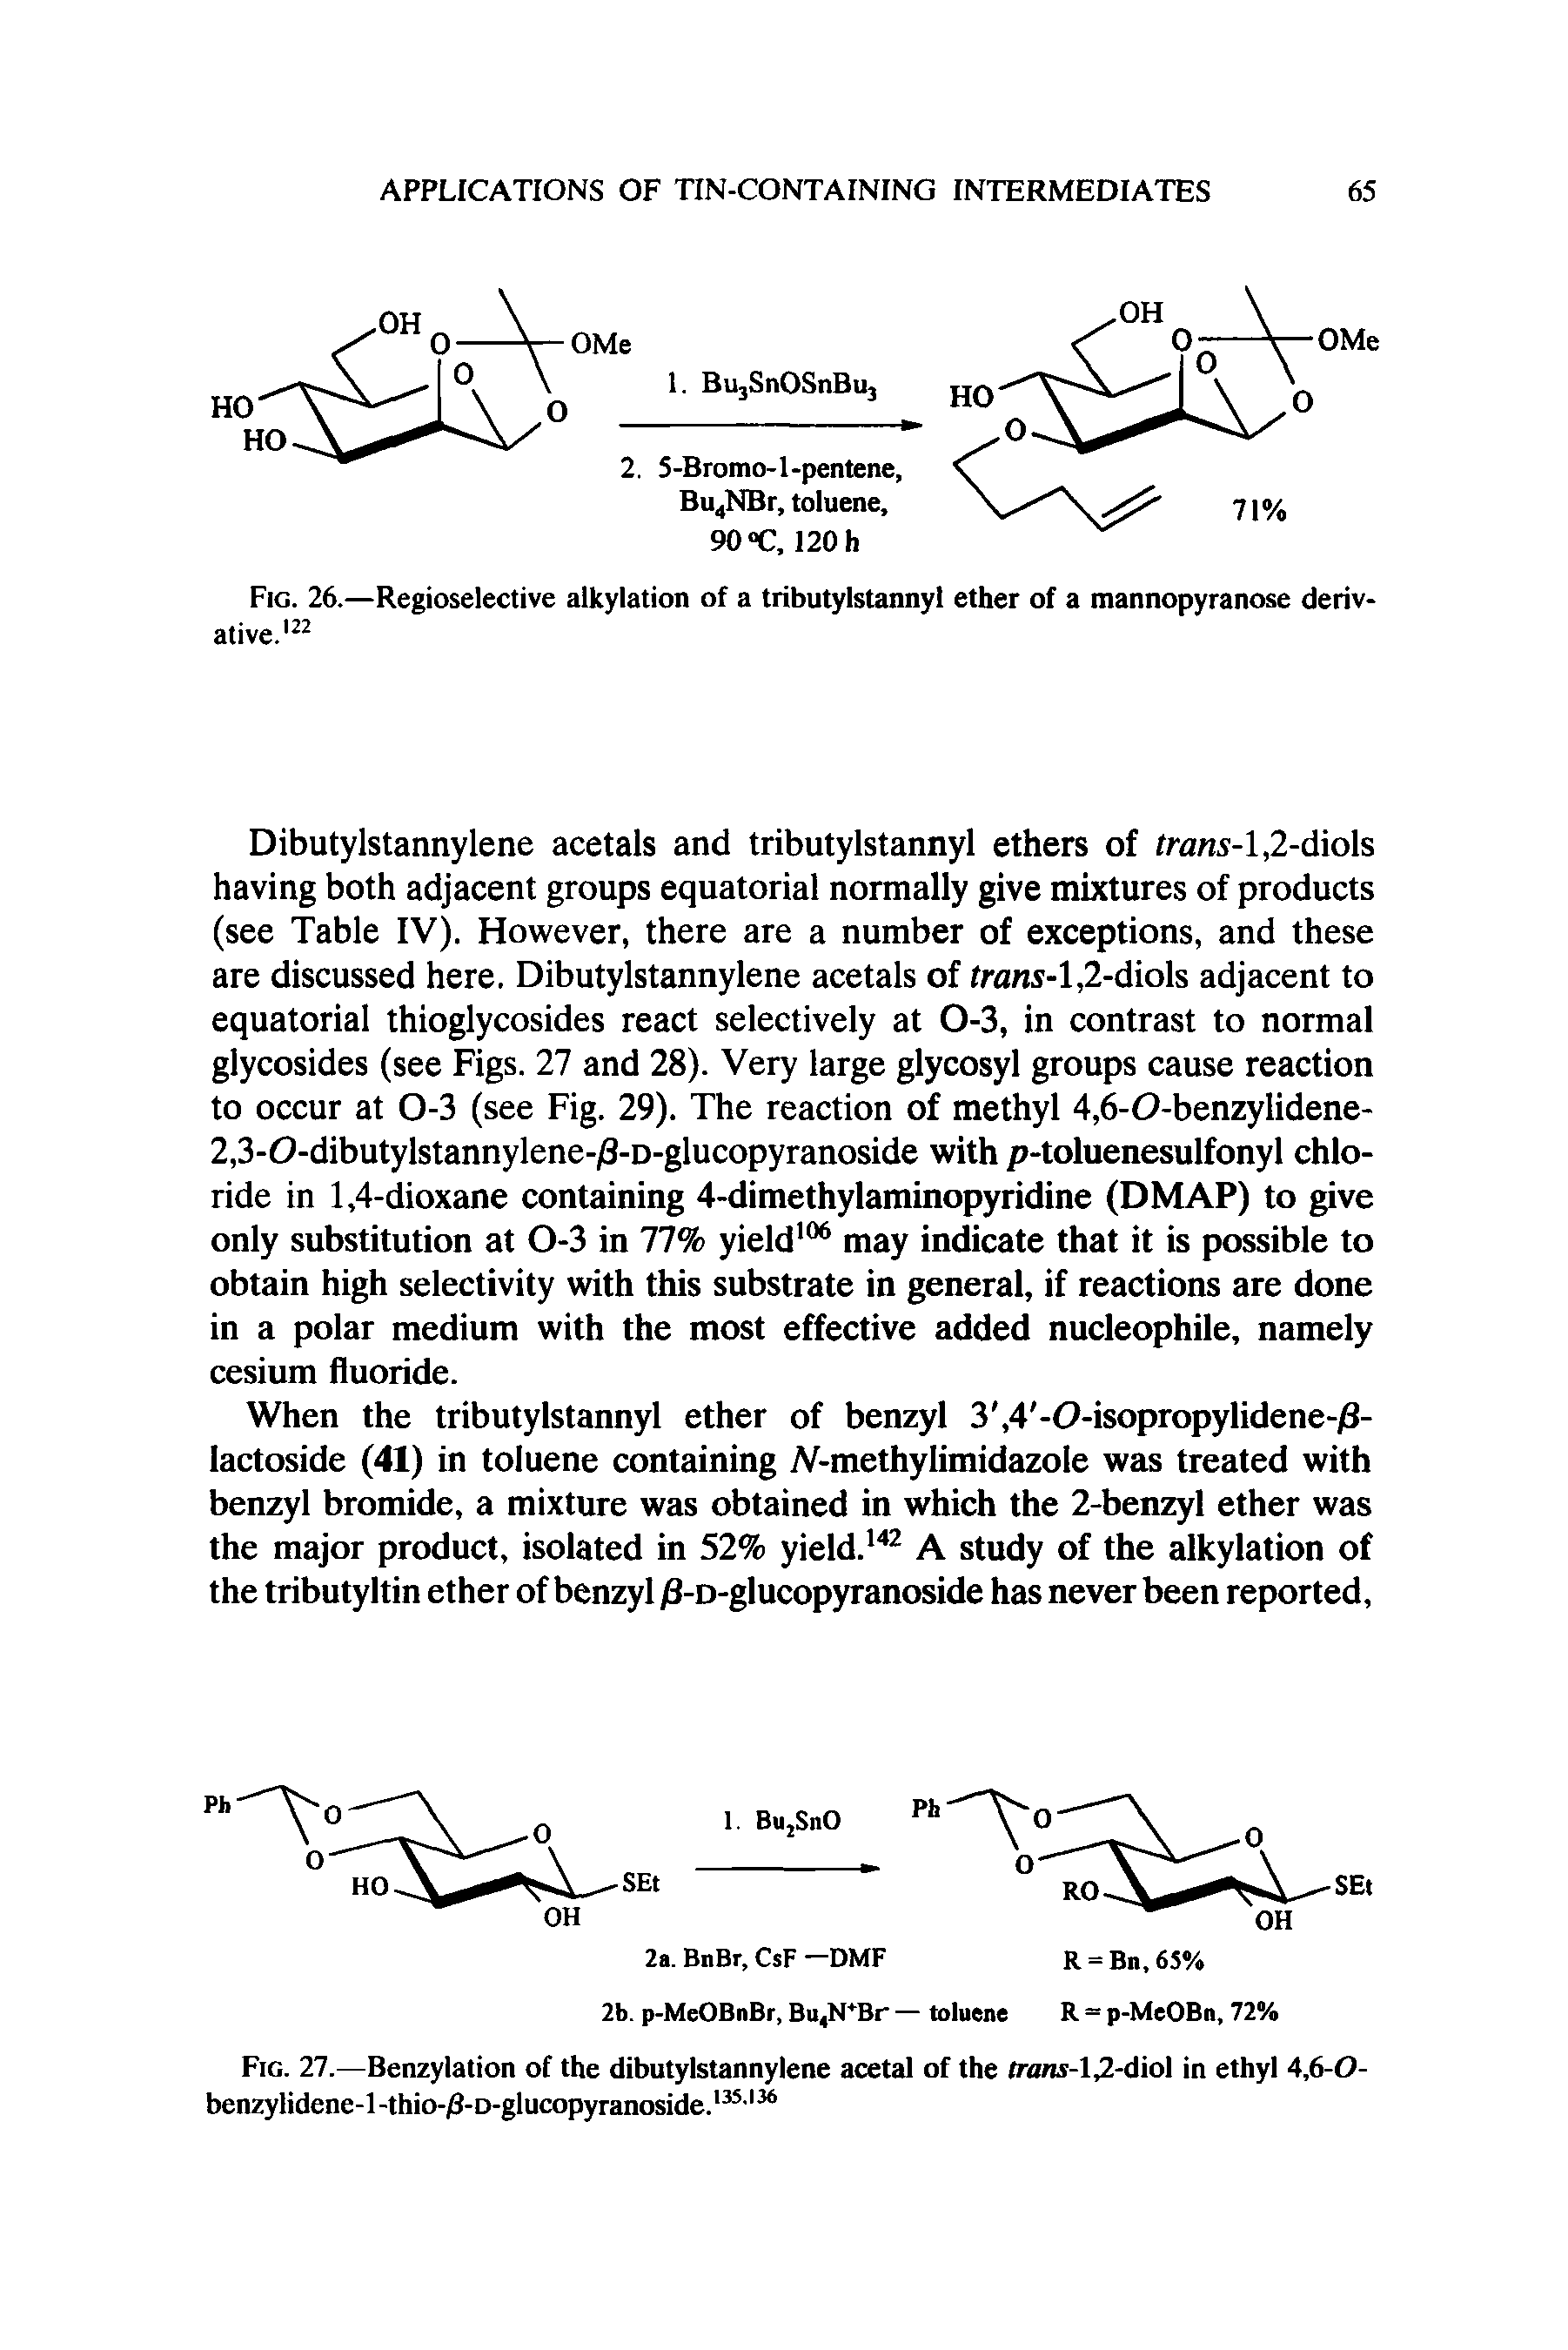 Fig. 27.—Benzylation of the dibutylstannylene acetal of the n iis-l,2-diol in ethyl 4,6-0-benzylidene-l-thio-/3-D-glucopyranoside.135136...